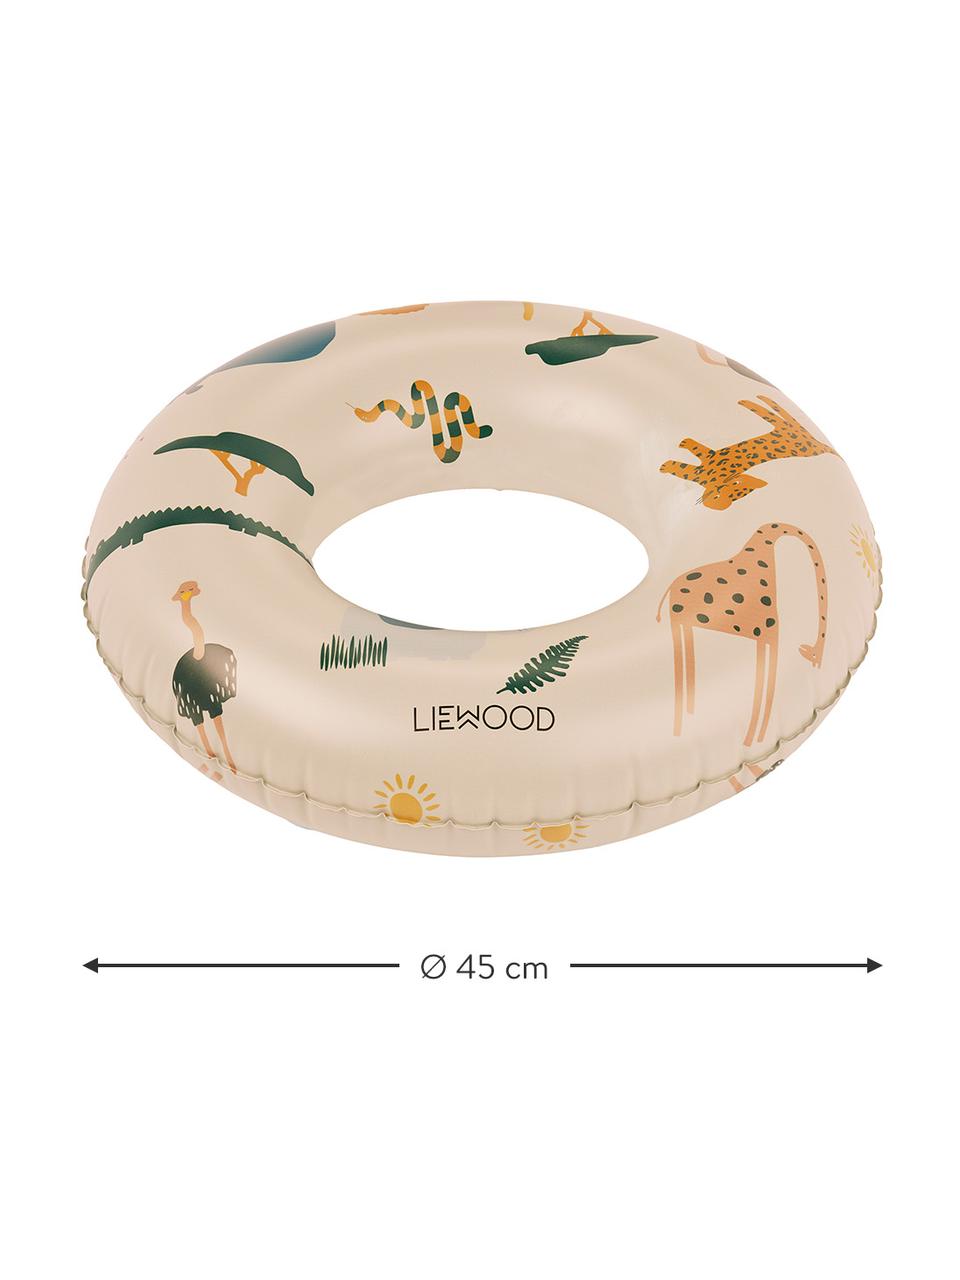 Kinderzwemring Baloo, 100% kunststof (PVC), Beige, multicolour (Safari patroon), Ø 45 cm